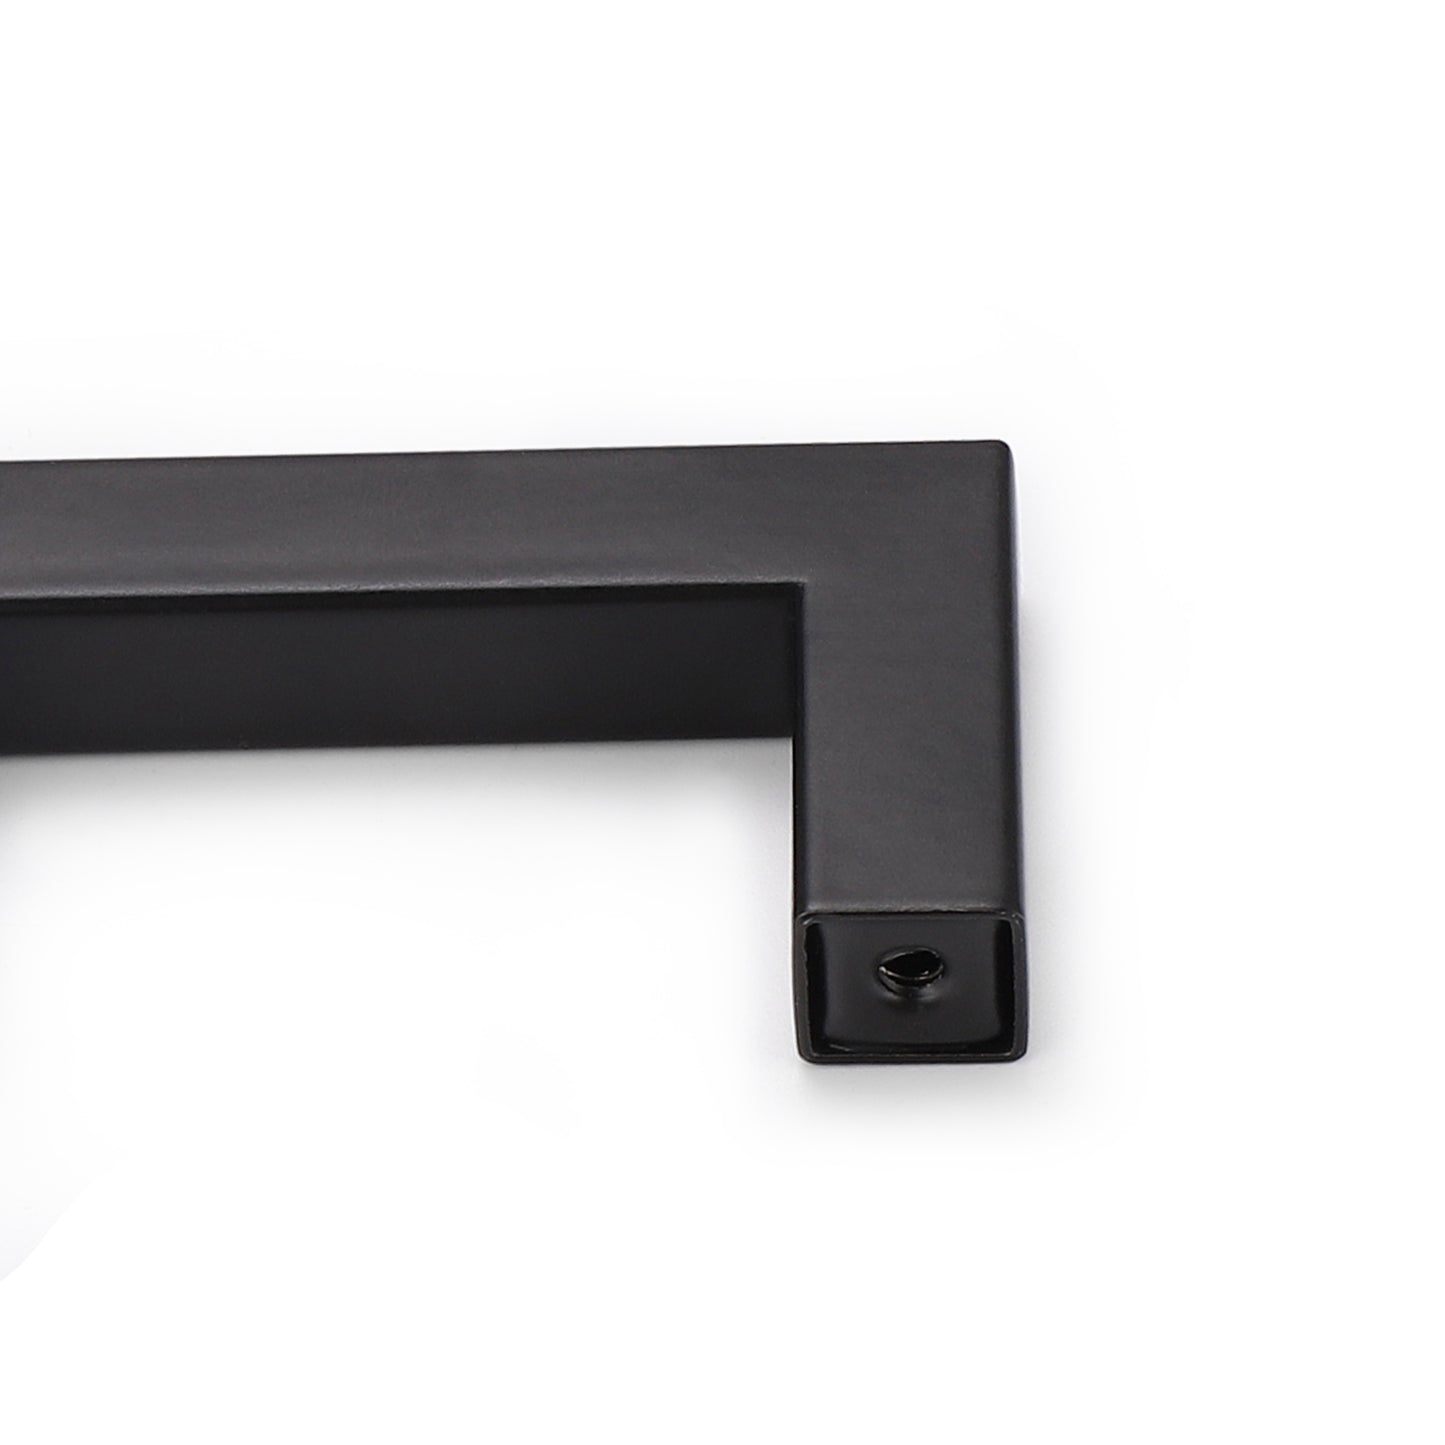 1/2" Square Cabinet Handles Black Finish 160mm 6 3/10inch Hole Centers PDDJS12HBK160 - Probrico